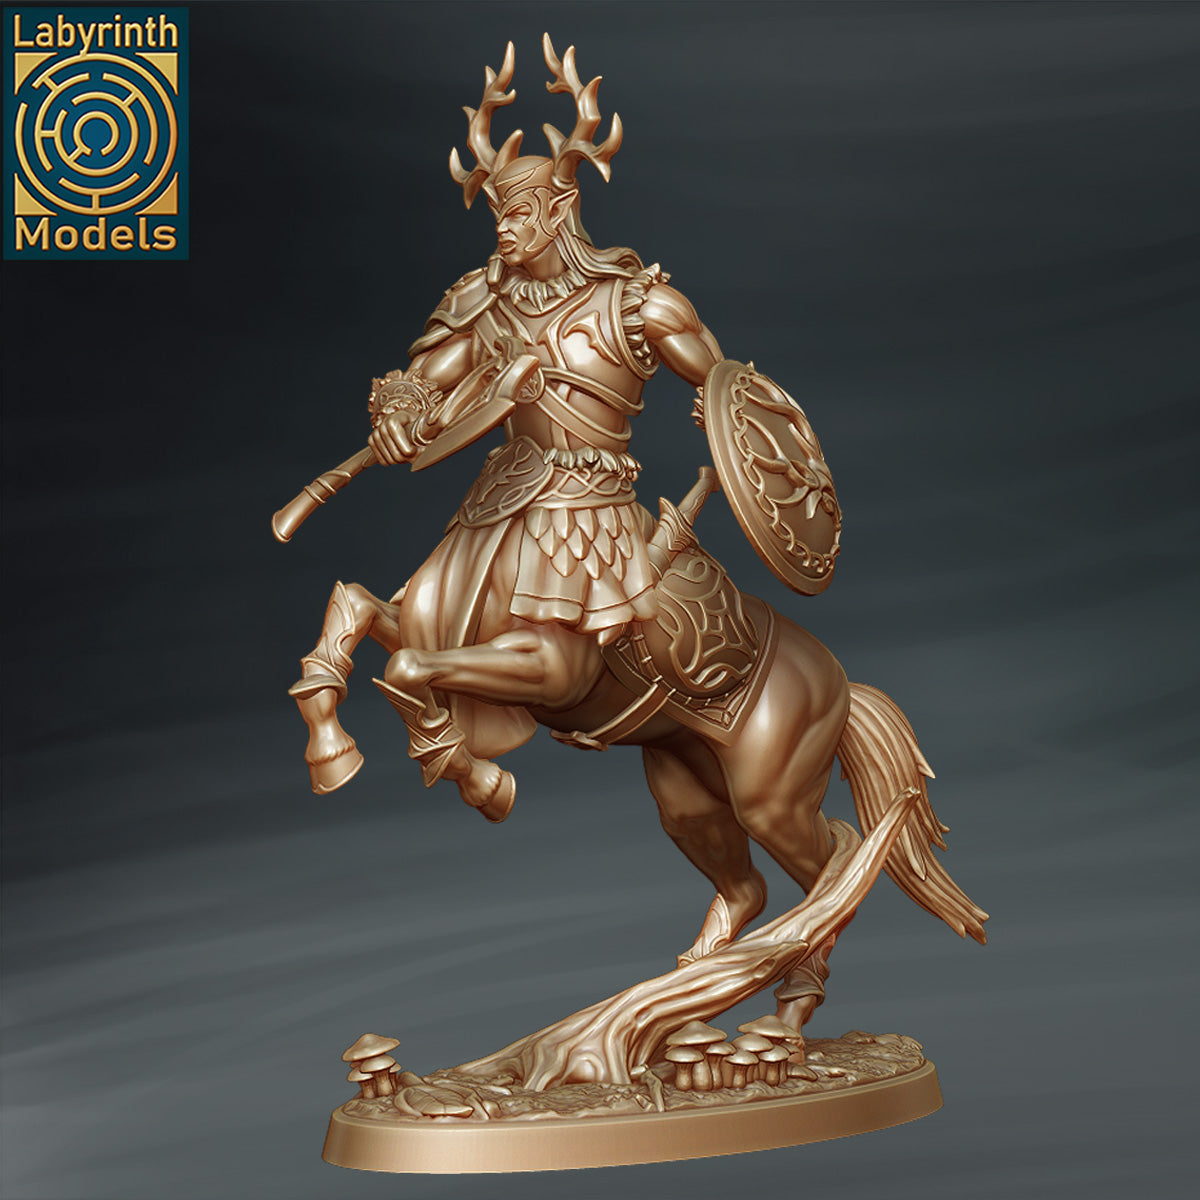 Centaur Champion by Labyrinth Models